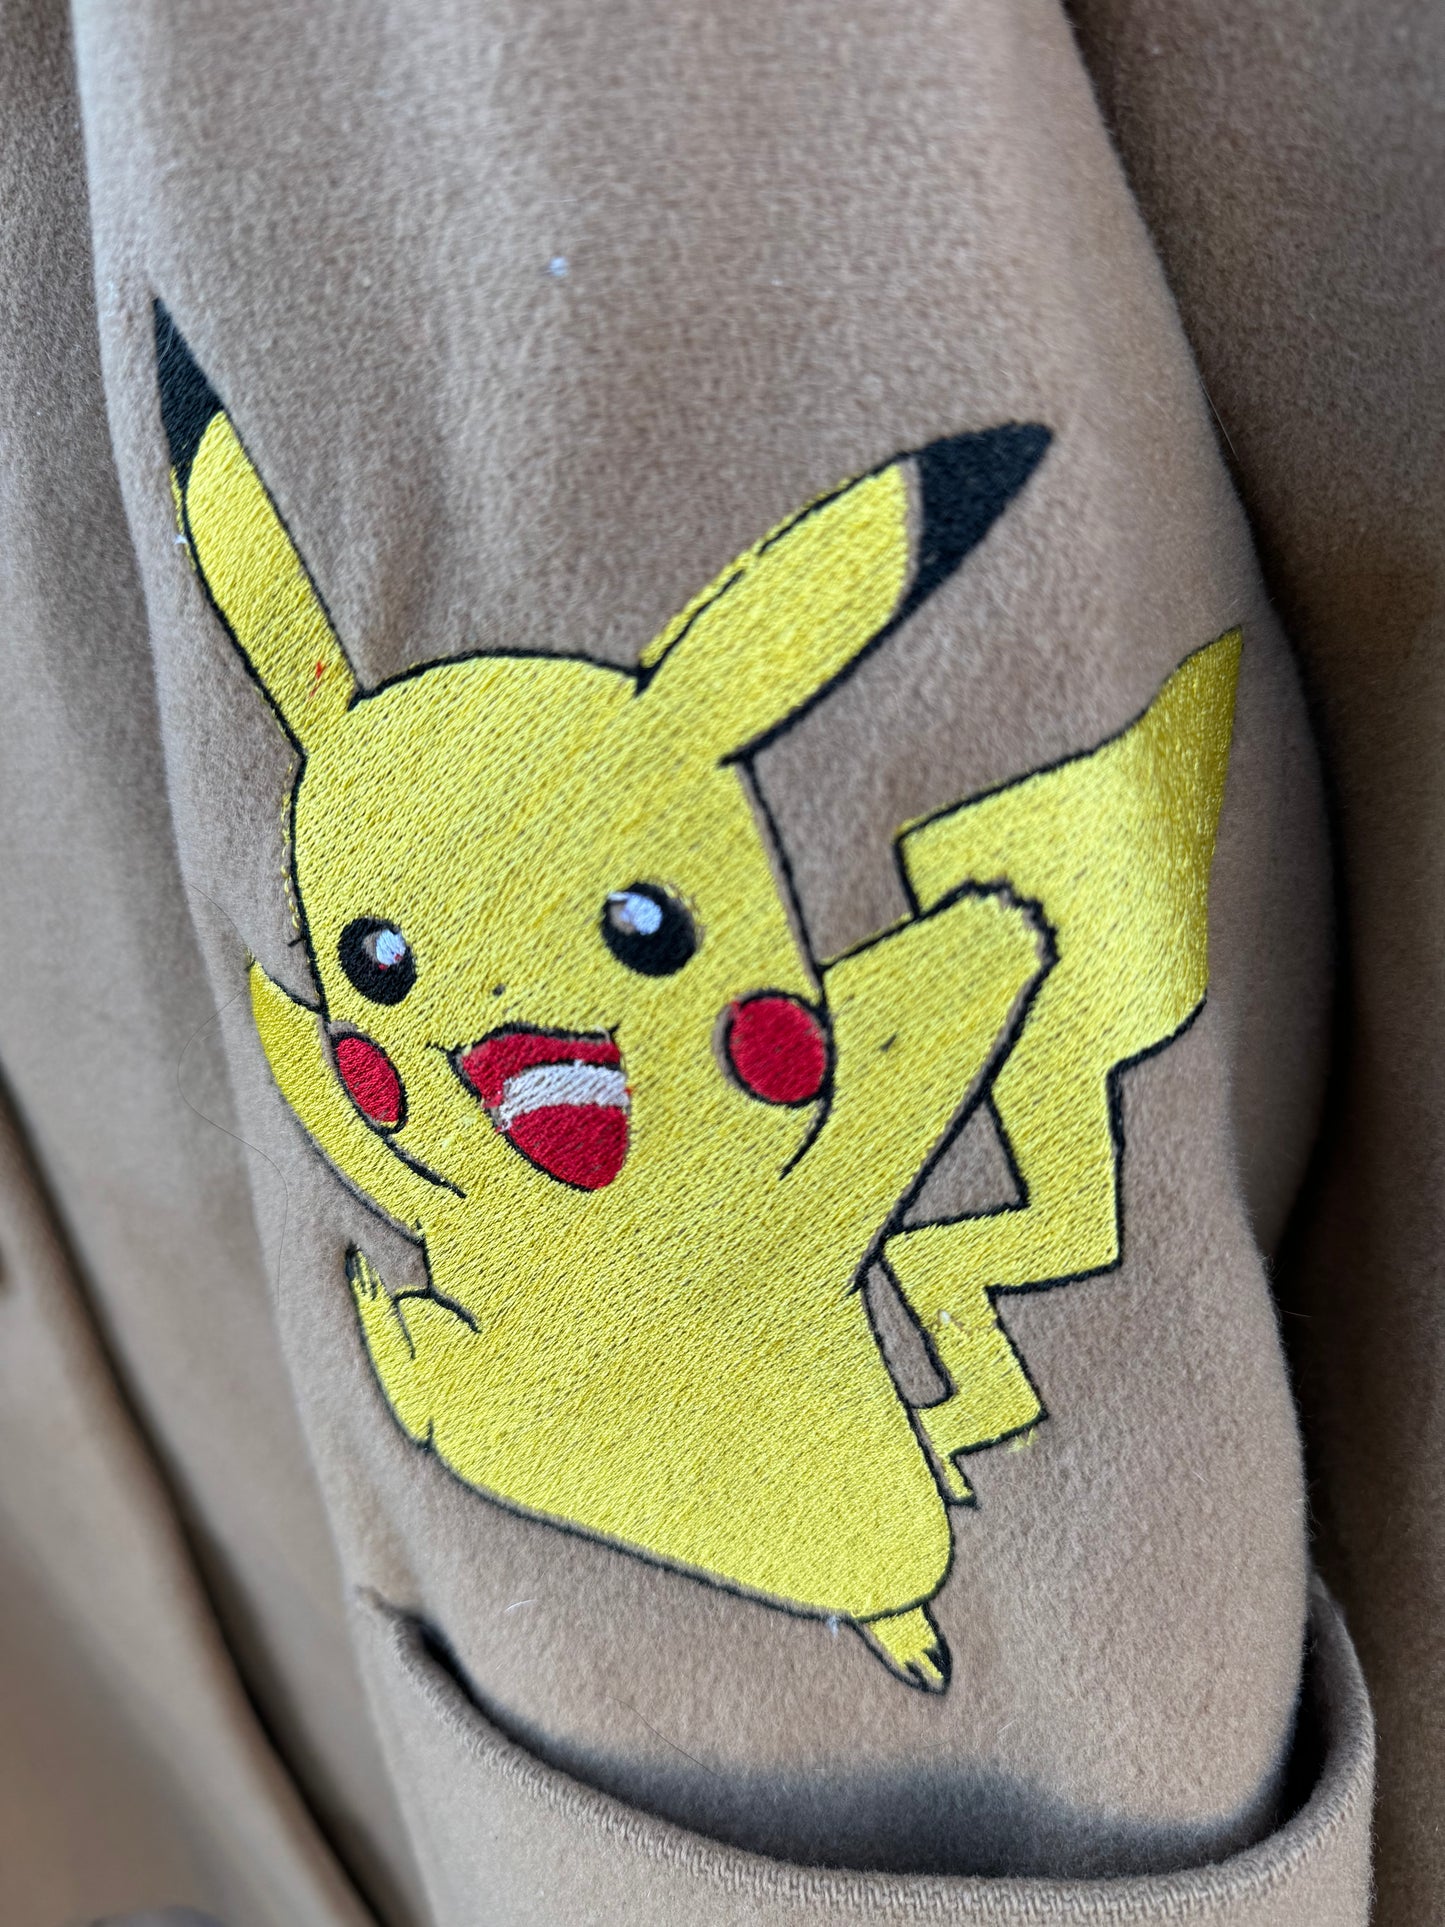 Pokémon Tan Trench coat